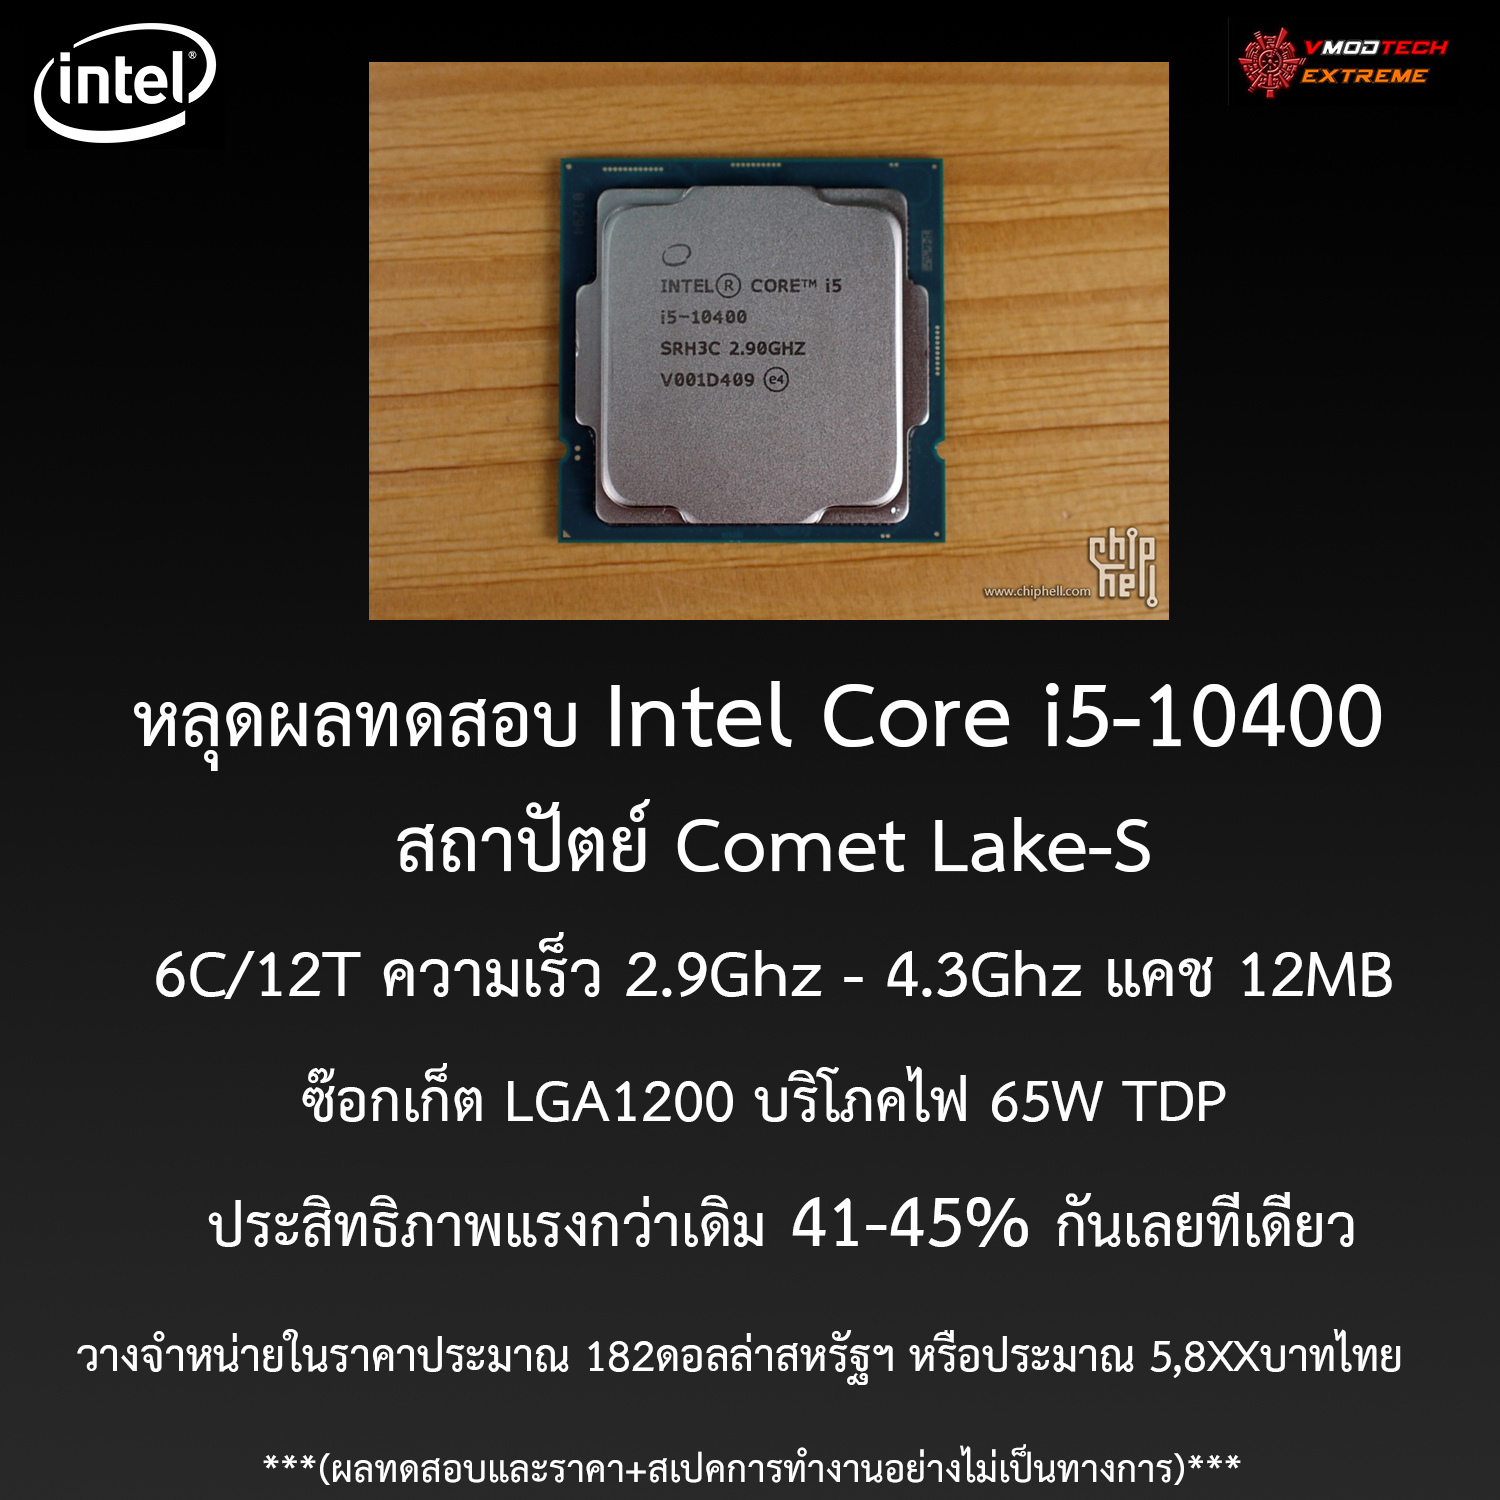 intel core i5 10400 spec benchmark หลุดผลทดสอบ Intel Core i5 10400 สถาปัตย์ Comet Lake S รุ่นใหม่ล่าสุดอย่างไม่เป็นทางการ ประสิทธิภาพแรงกว่าเดิม 41 45% กันเลยทีเดียว 